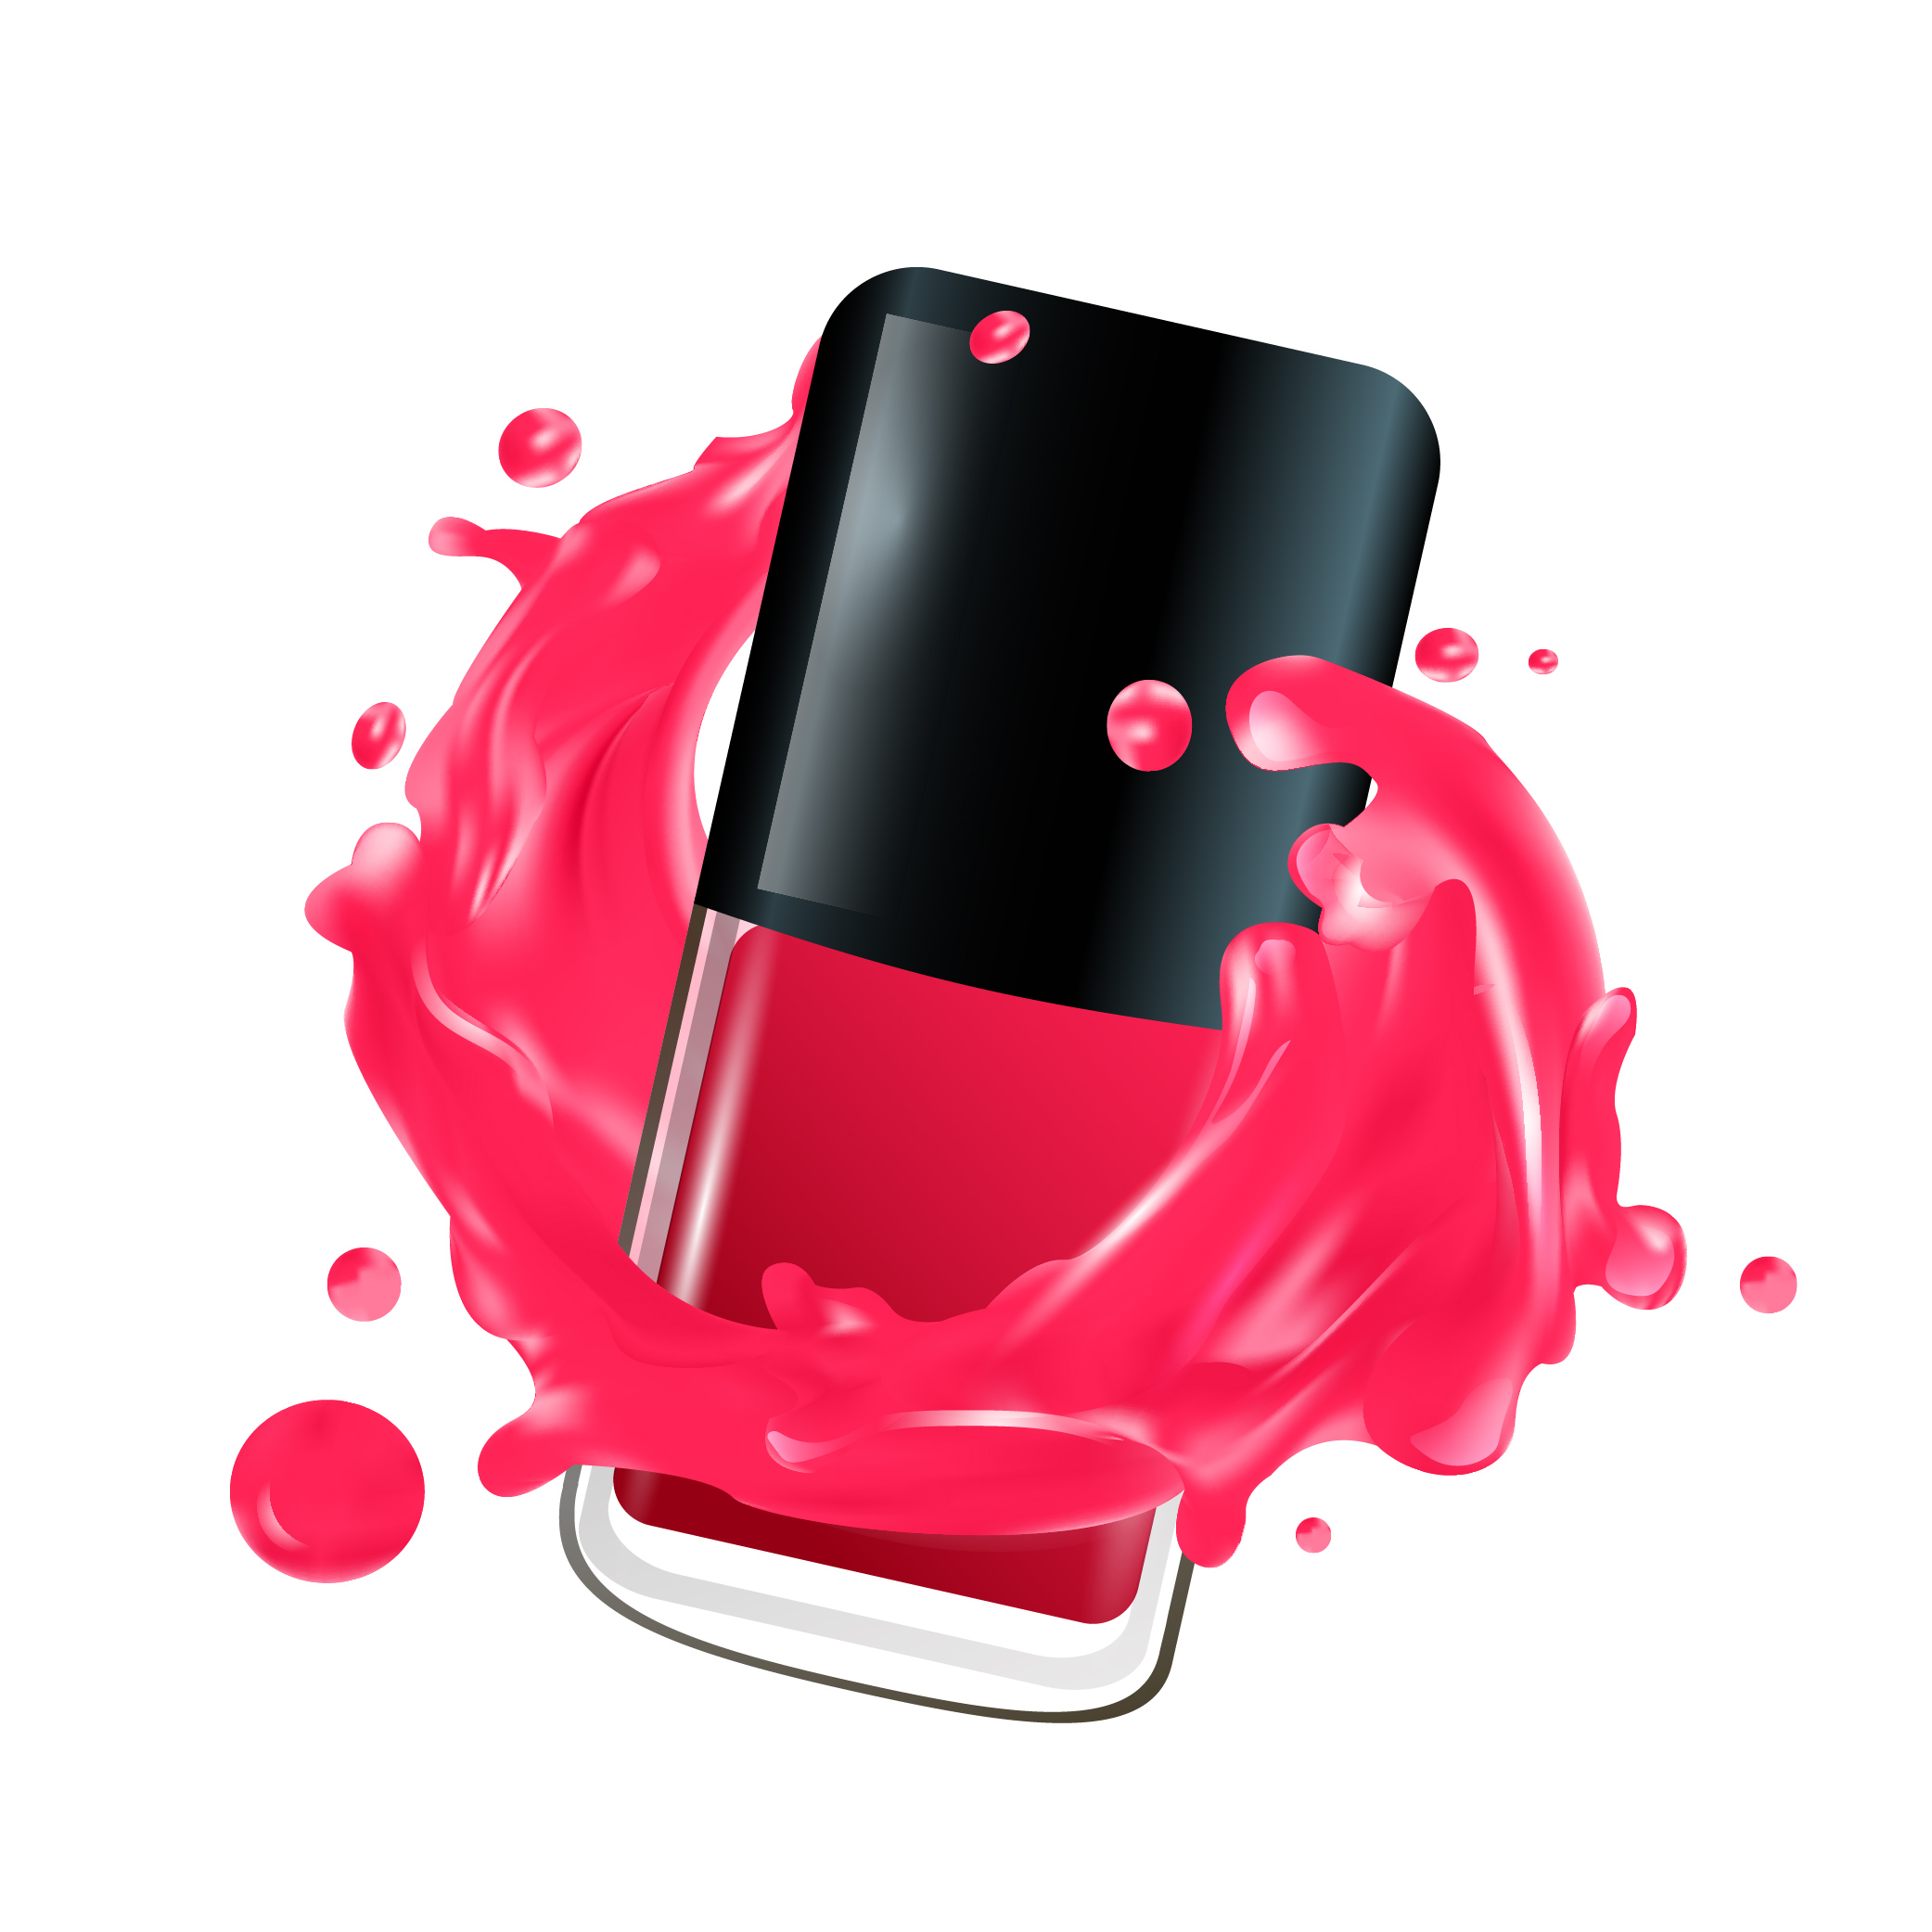 Nail polish in splash. Vector illustration. 484978 - Download Free